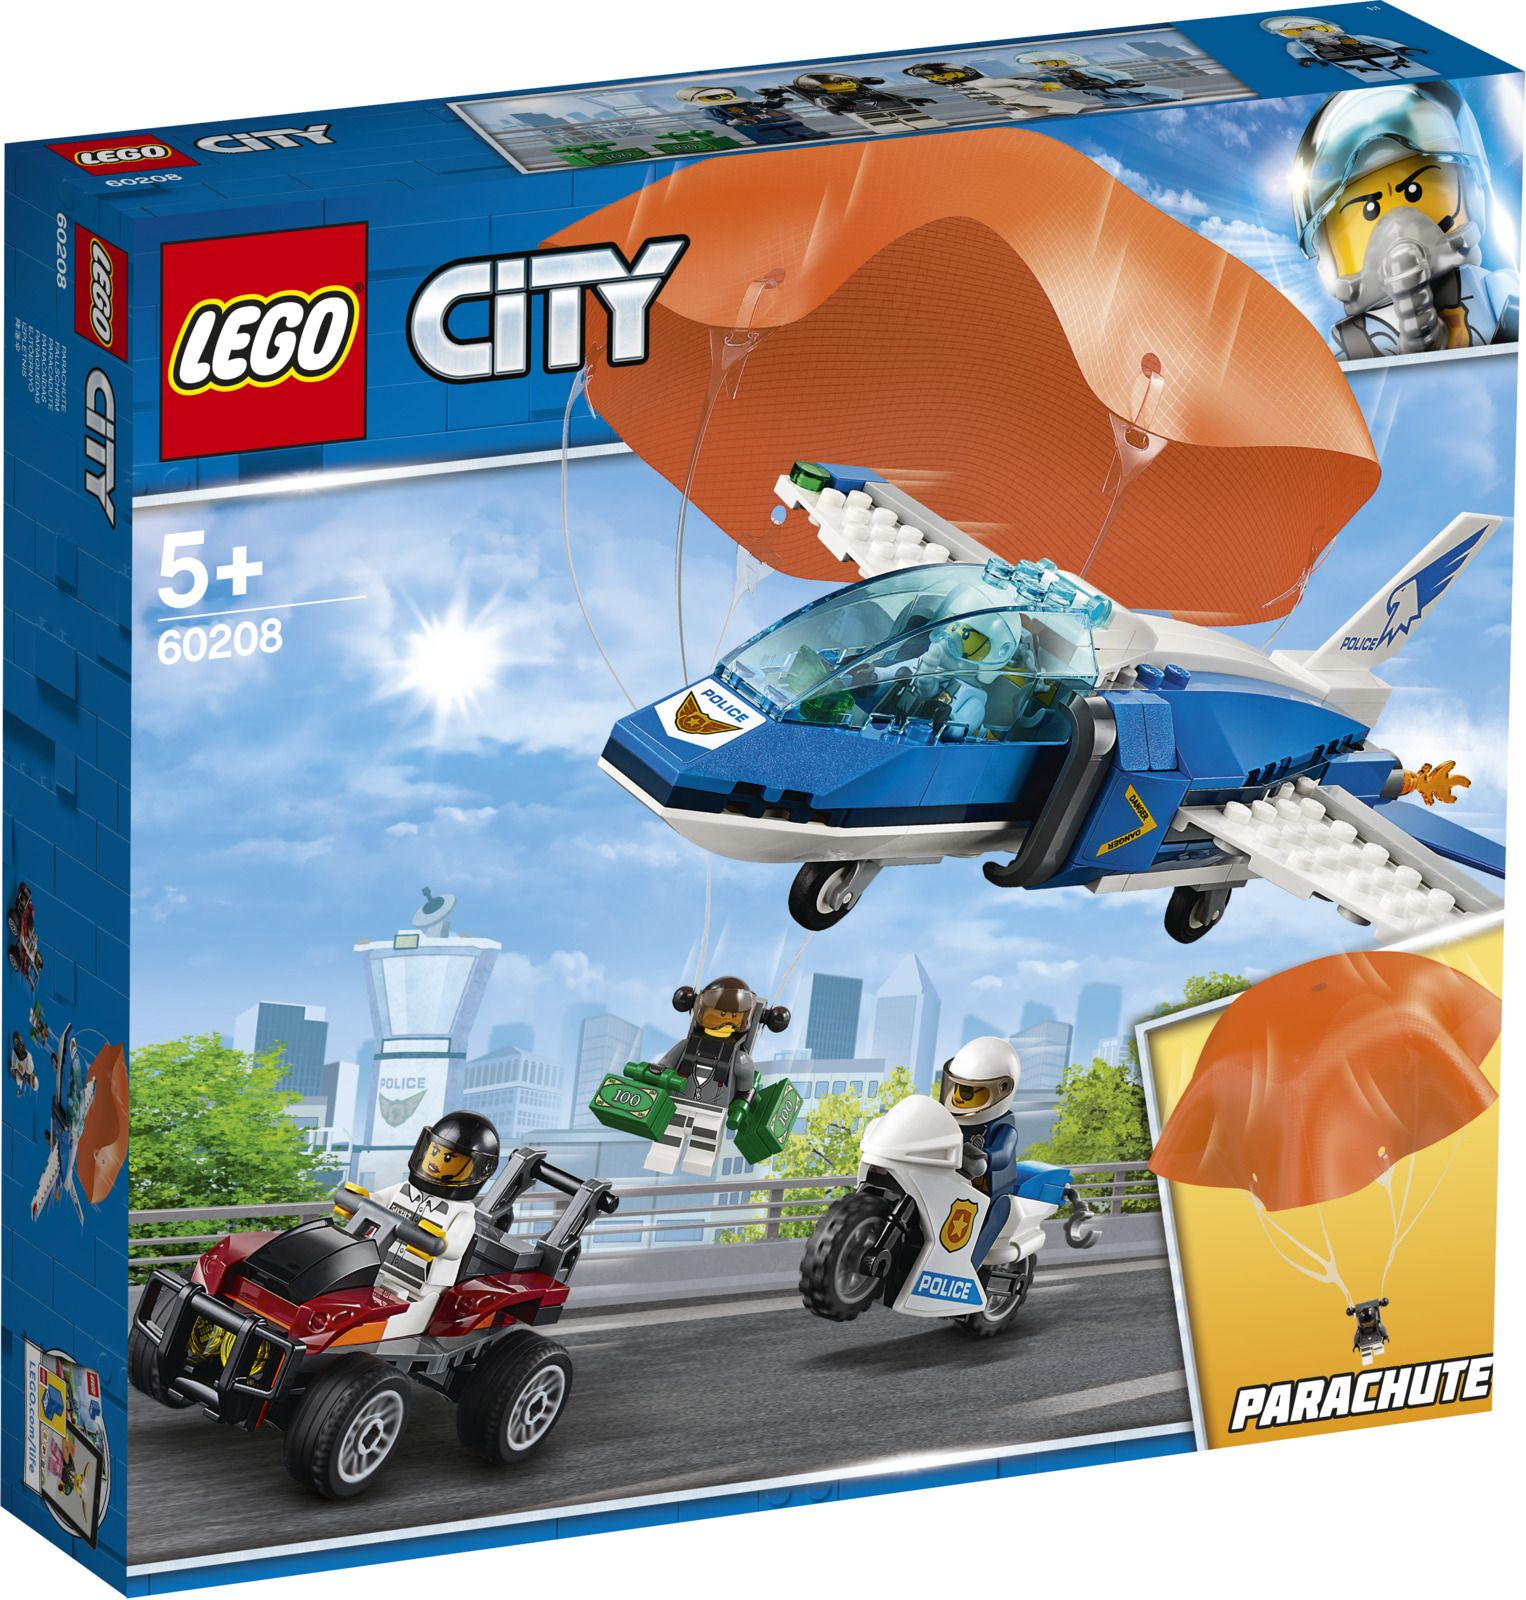 LEGO City Police 60208  :   